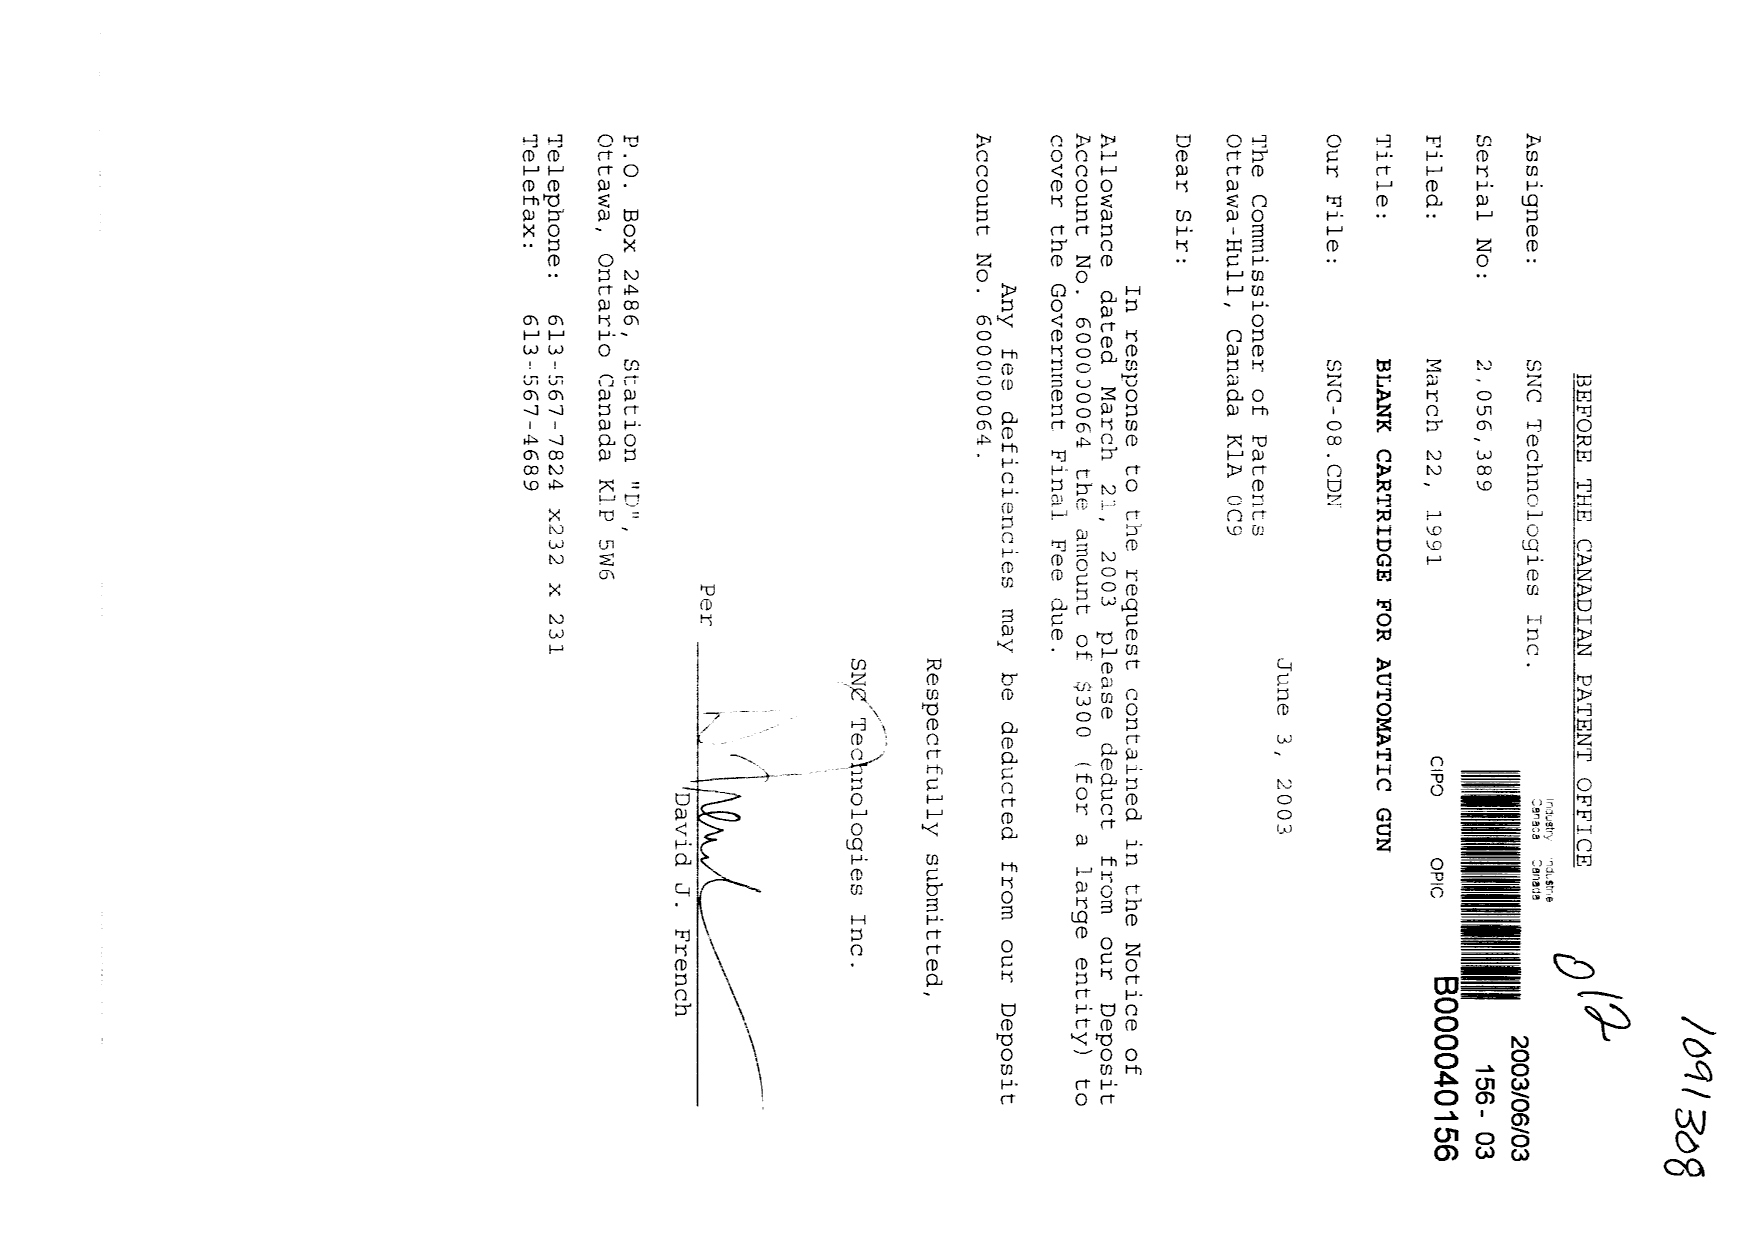 Canadian Patent Document 2056389. Correspondence 20030603. Image 1 of 1